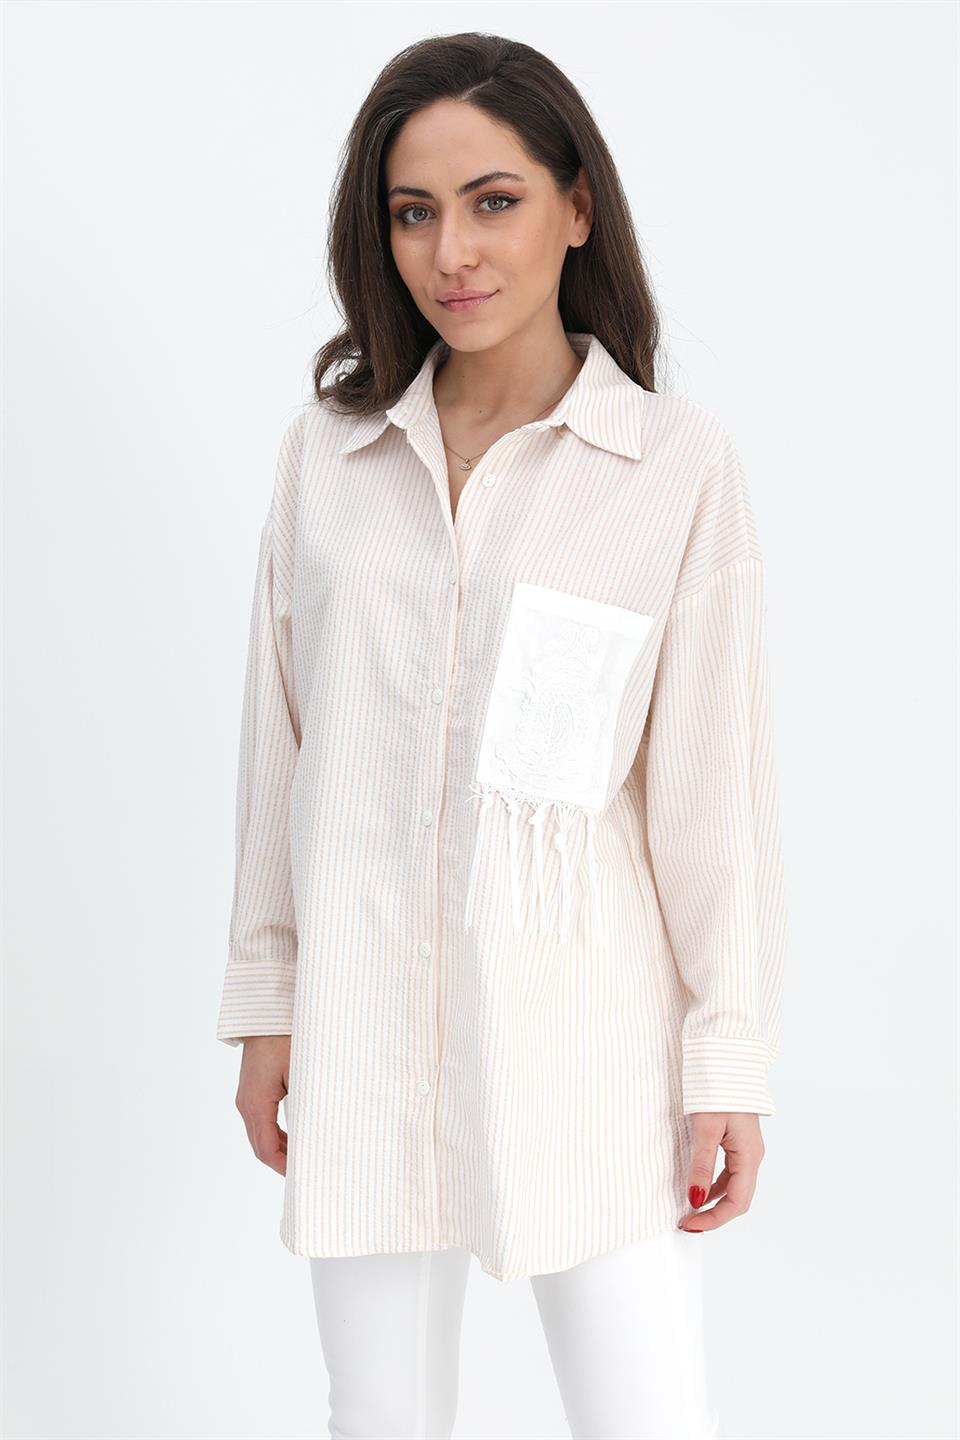 Women's Shirt Pocket Embroidery Tasseled Sequins - Beige - STREETMODE™